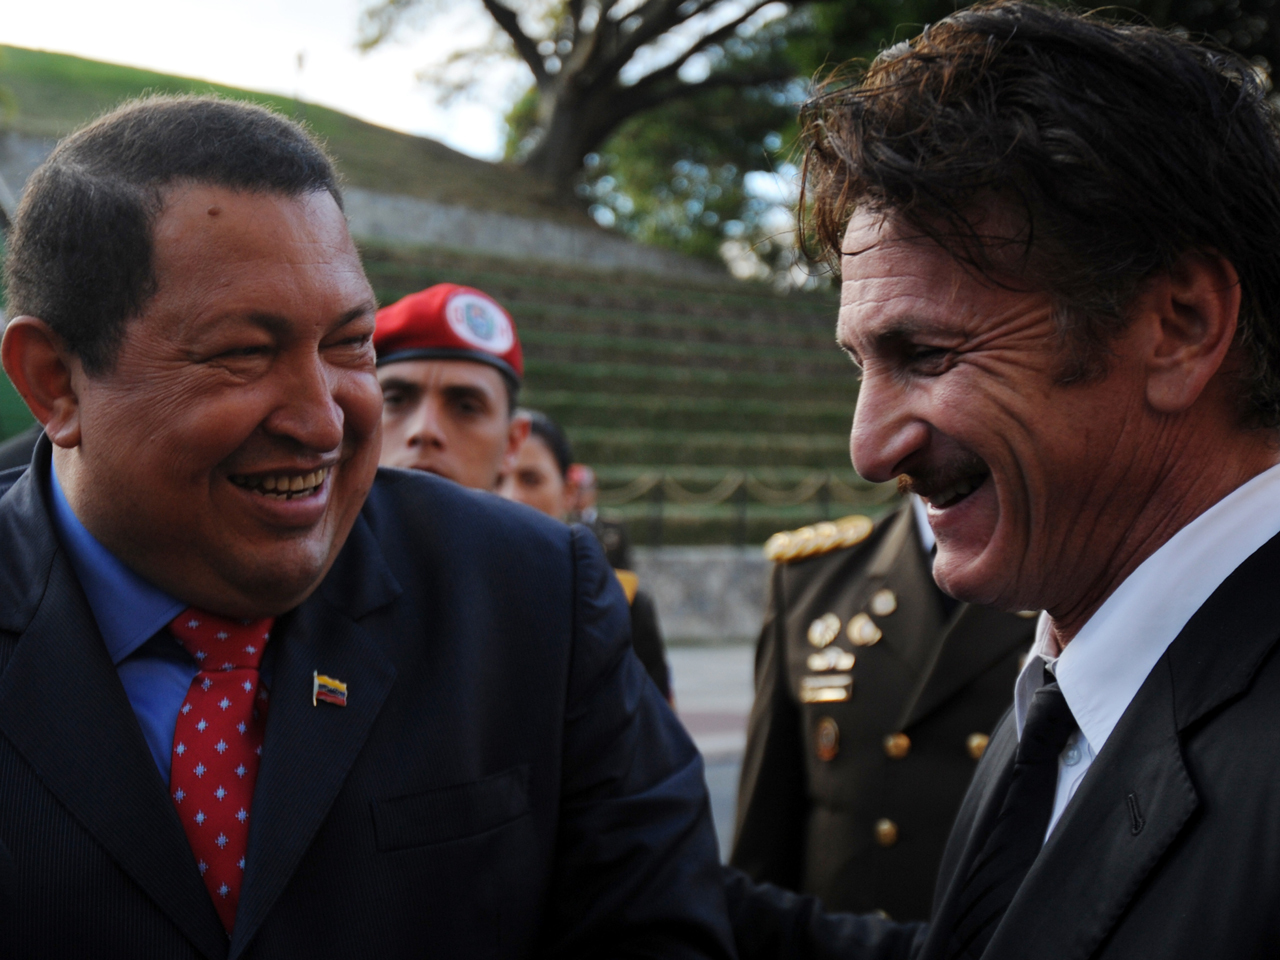 Sean Penn joins Hugo Chavez on campaign trail in Venezuela - CBS News